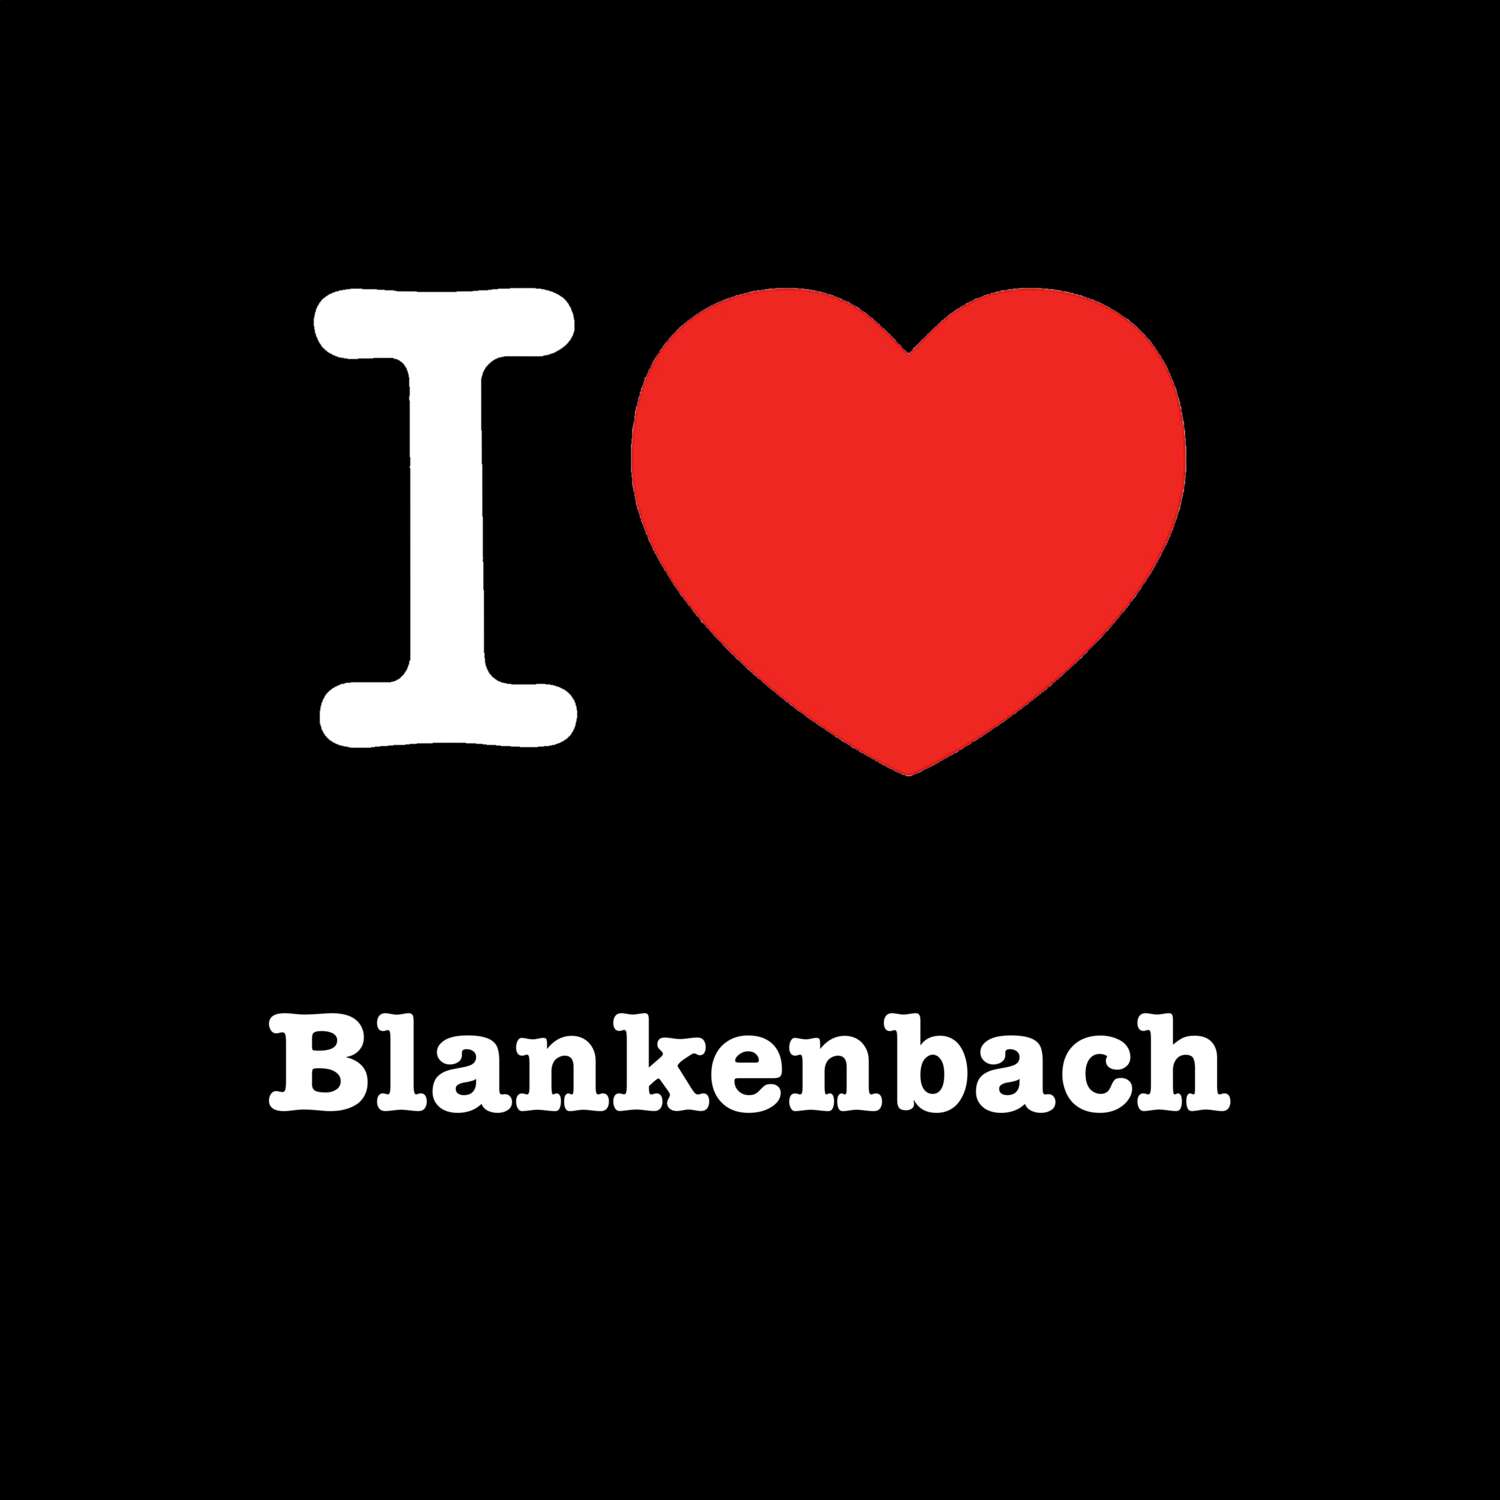 Blankenbach T-Shirt »I love«